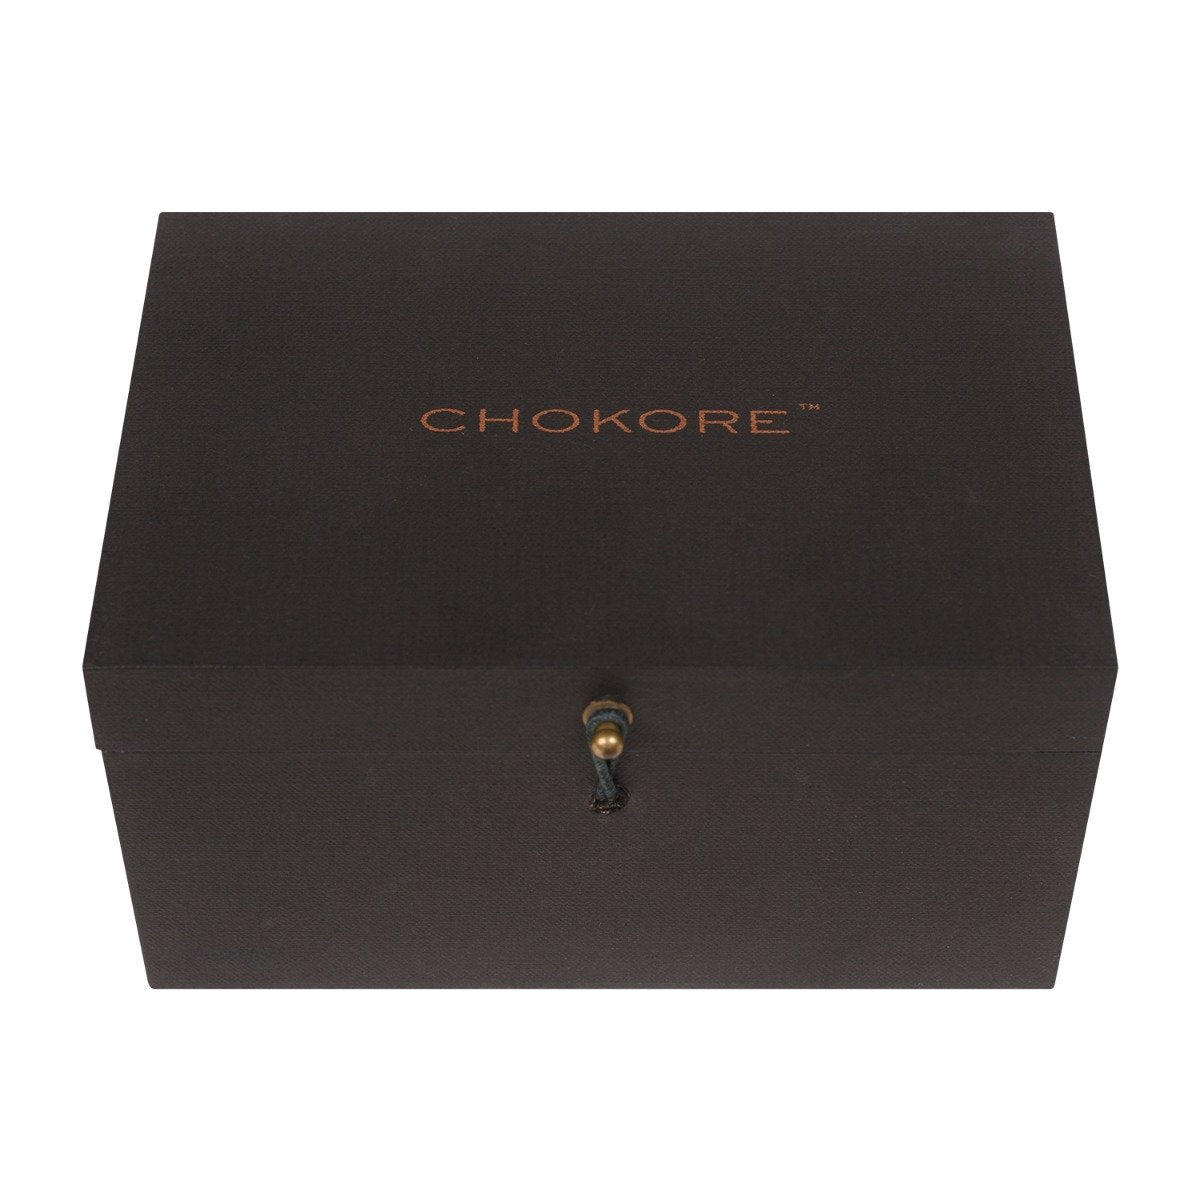 Chokore Burgundy color 3-in-1 Gift set